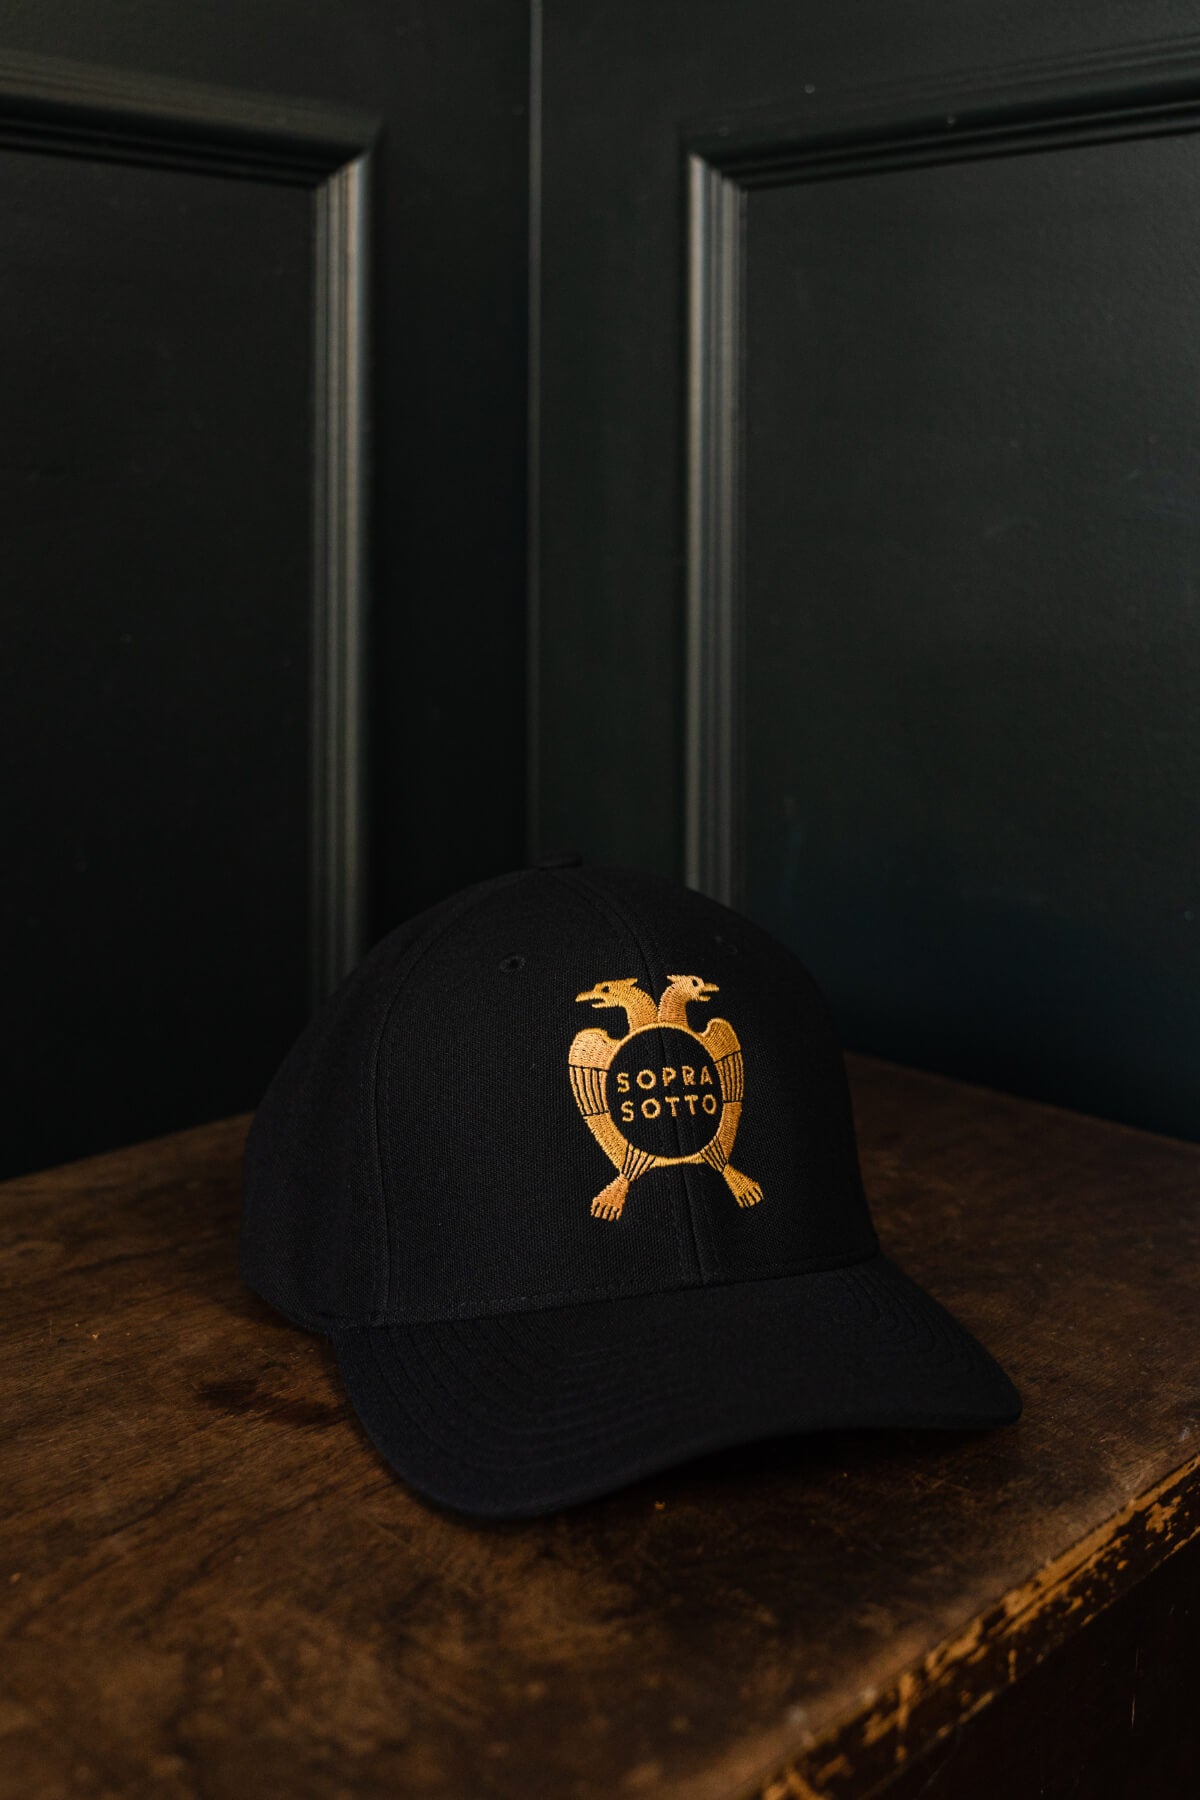 Black baseball hat with gold Sopra Sotto logo